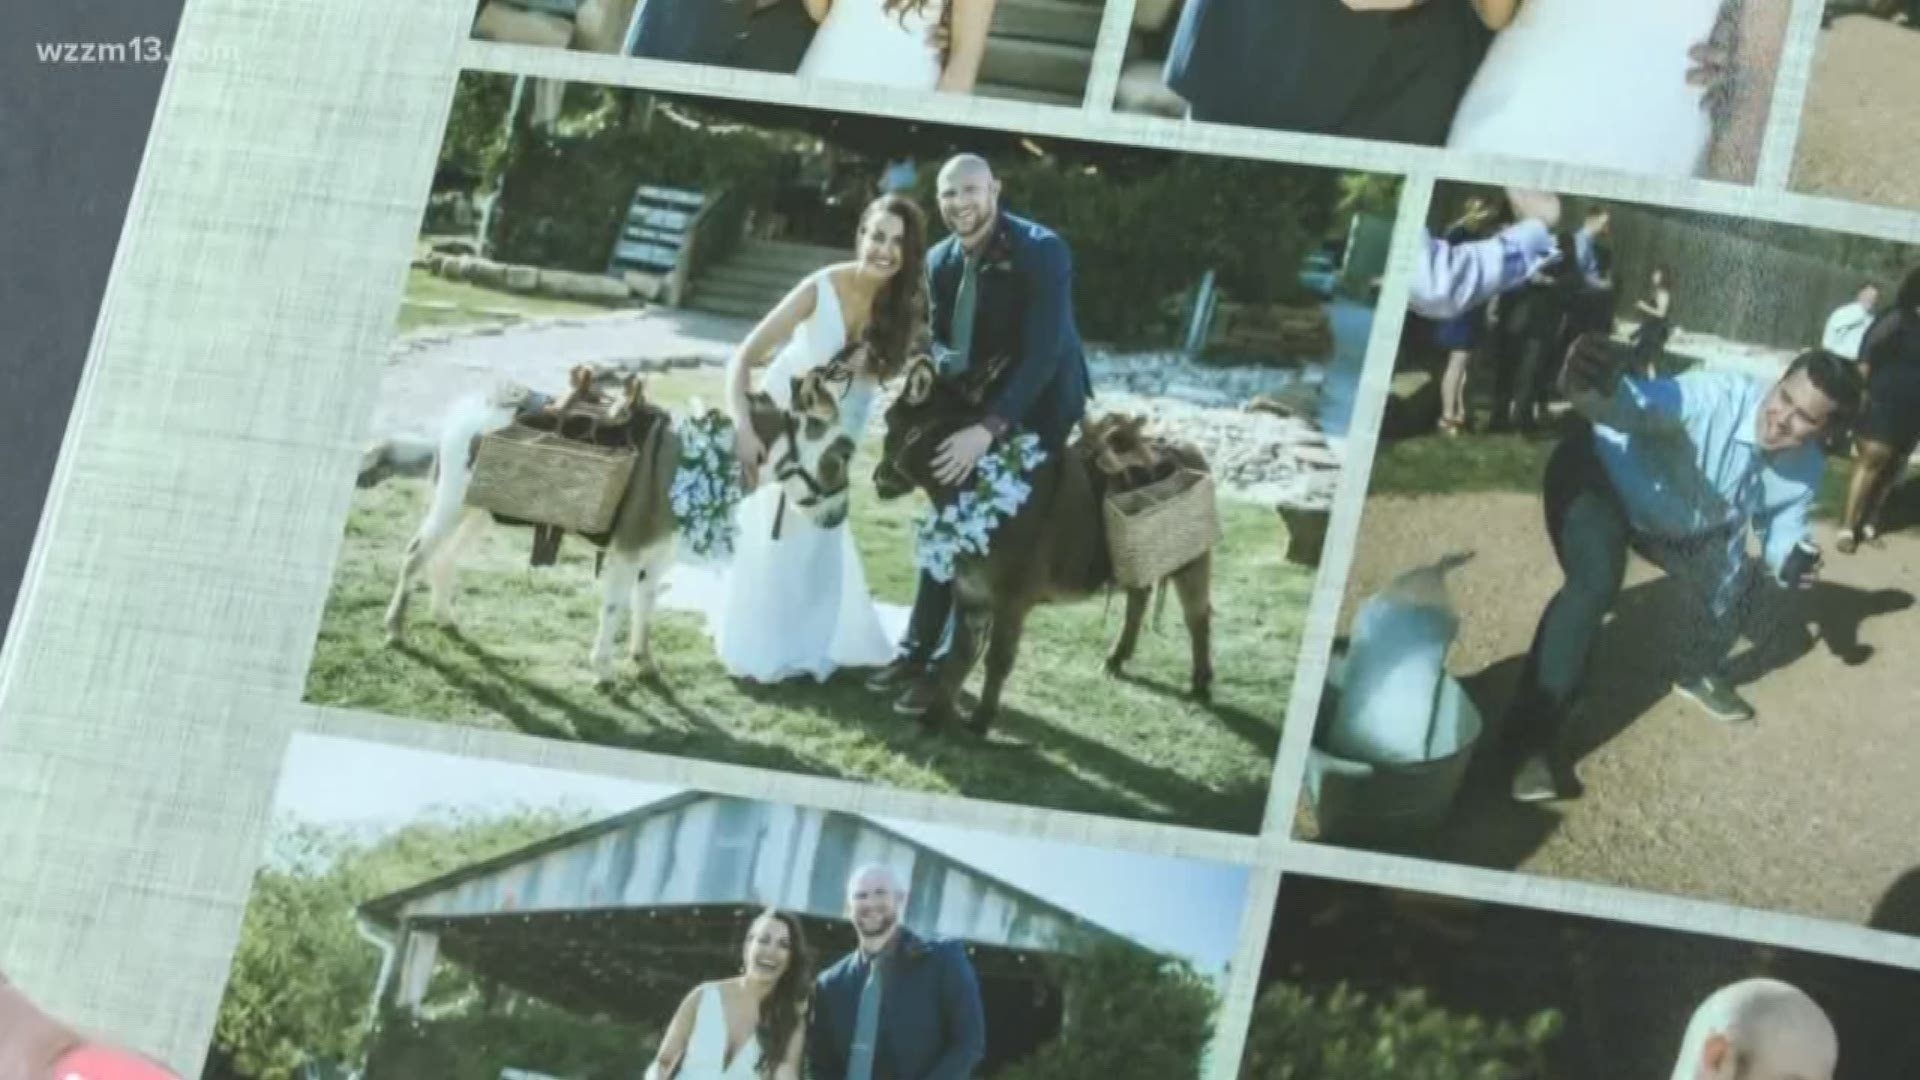 Porter Hills residents see Kamady's wedding photos